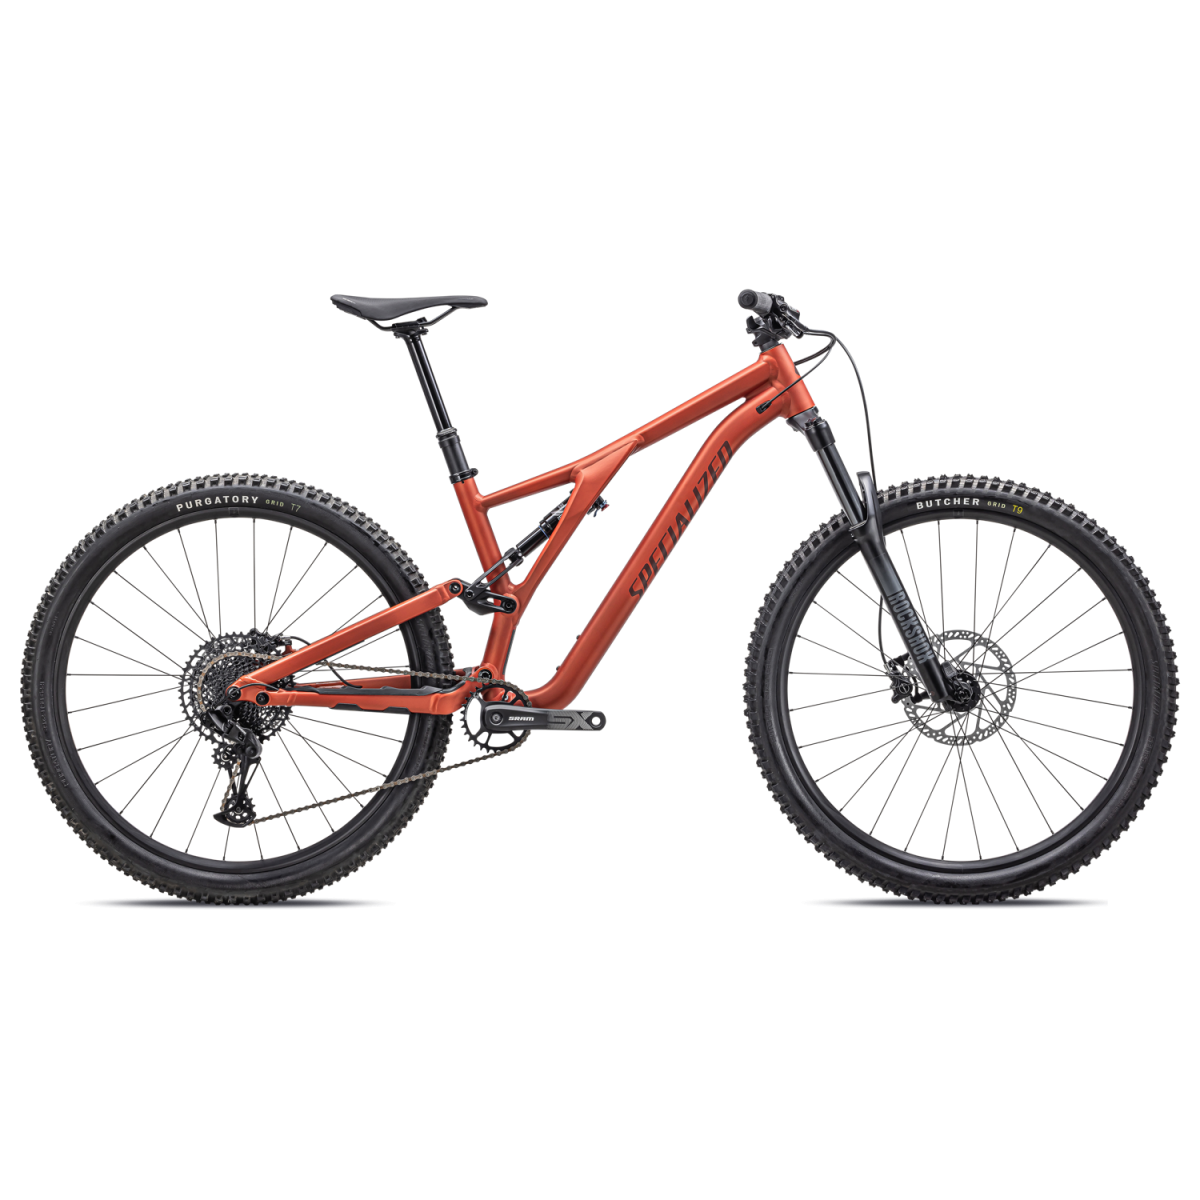 Specialized Stumpjumper Alloy kalnų dviratis / Satin Redwood